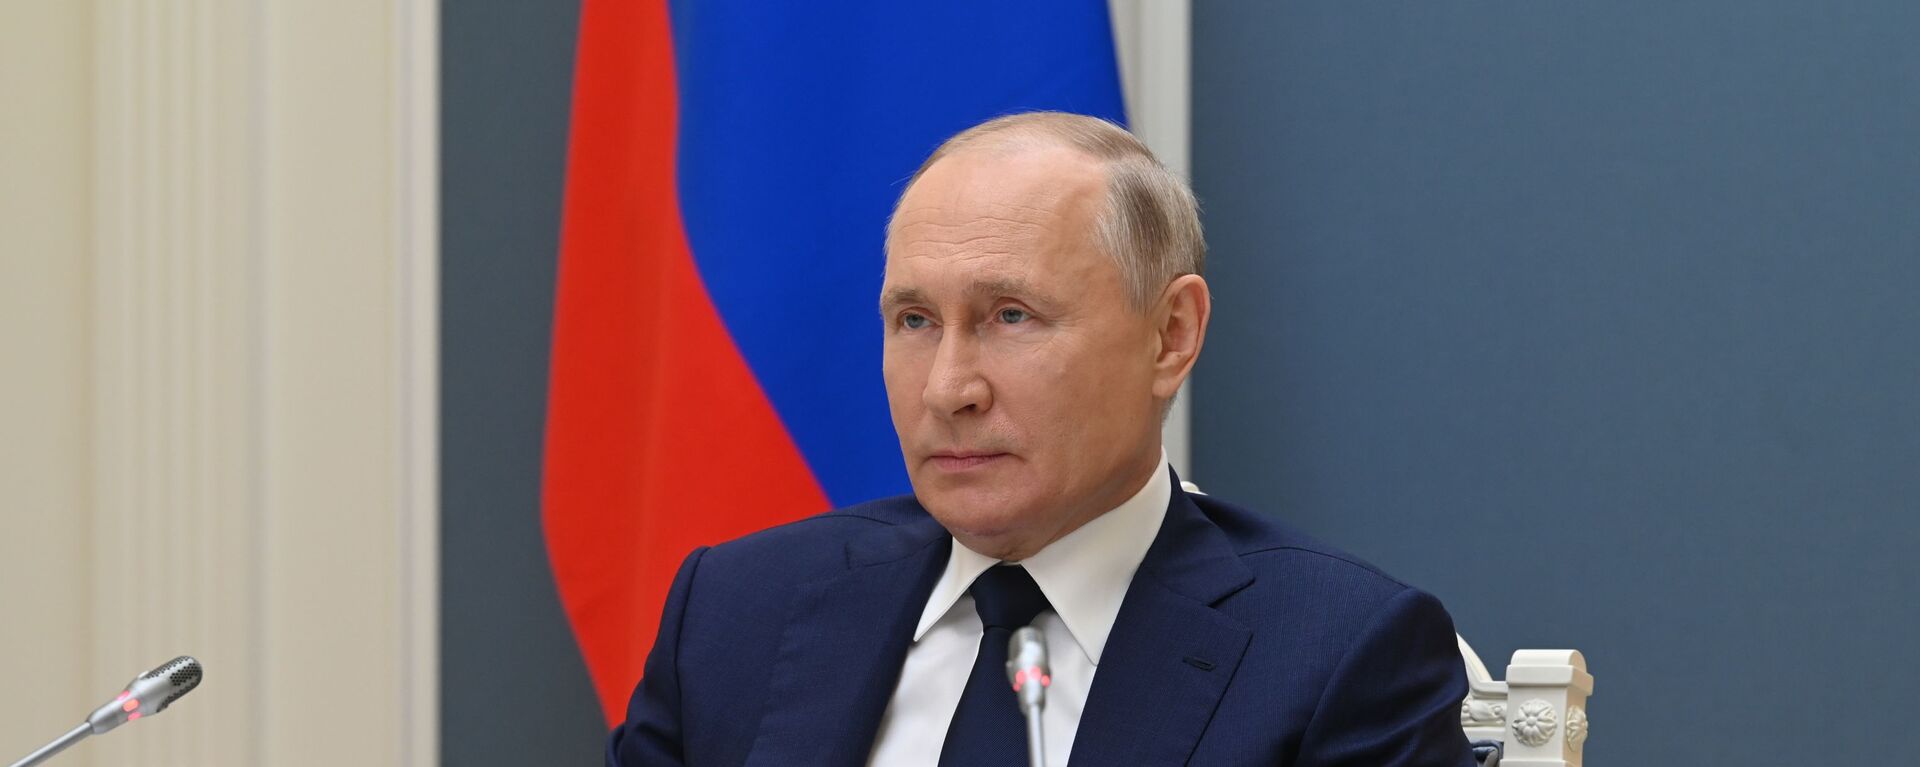 Tổng thống Nga Vladimir Putin - Sputnik Việt Nam, 1920, 15.10.2021